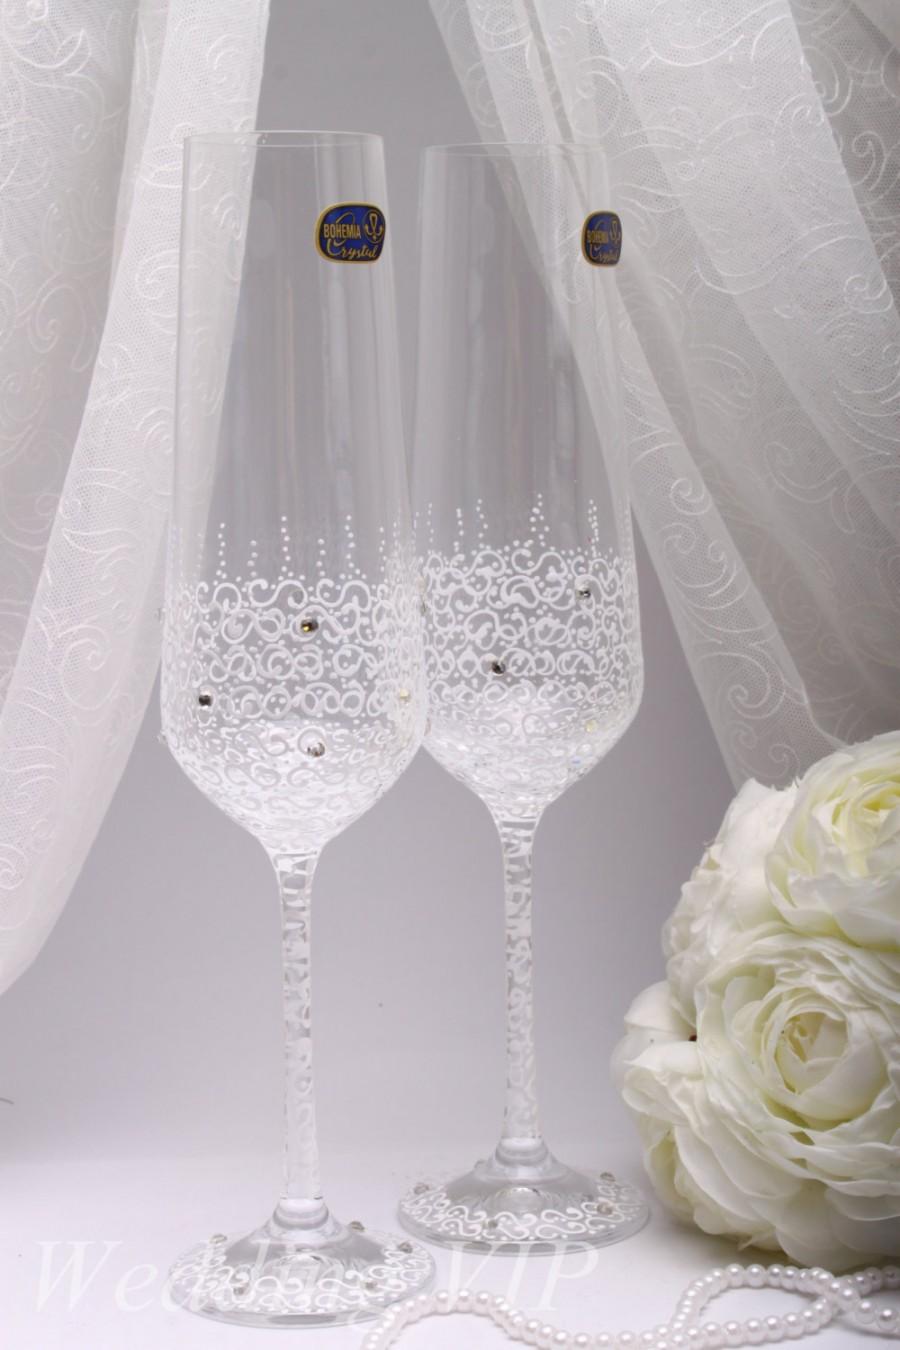 Hochzeit - Glasses wedding White LACE -HAND Painted- Personalized glasses Wedding Toasting Glasses champagne glasses Champagne Flutes Mr and Mrs glasse